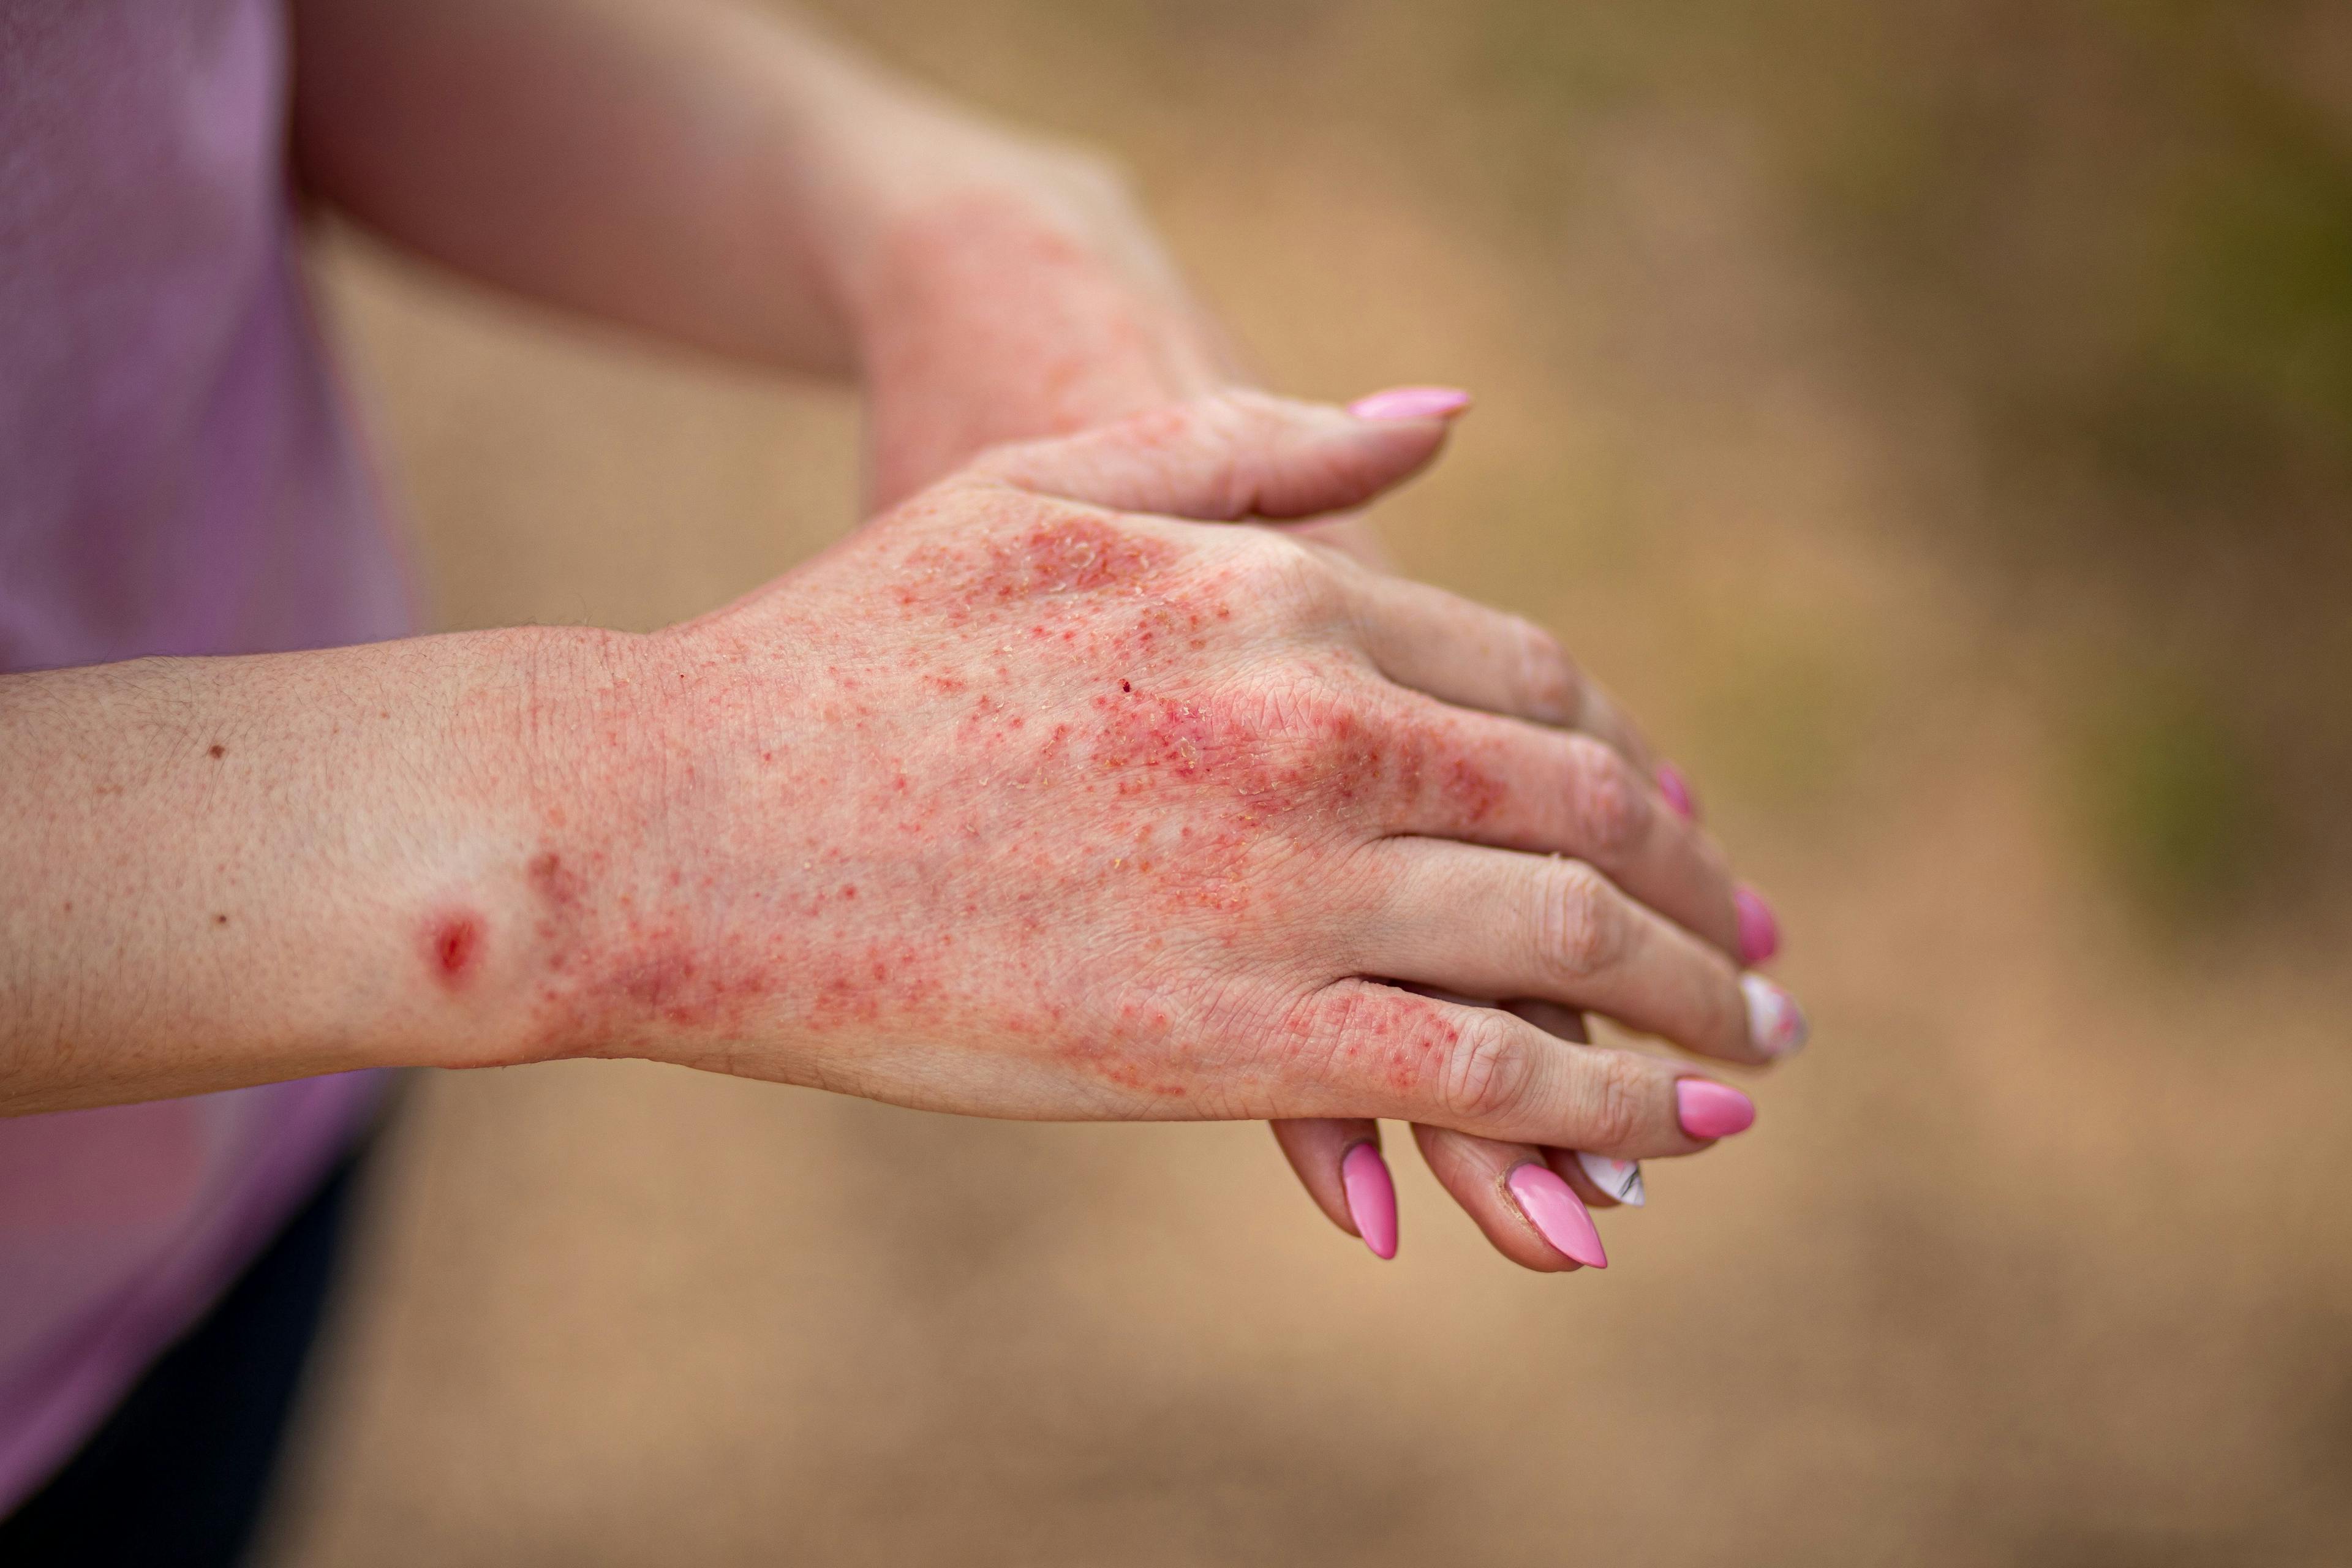 Woman's hands with atopic dermatitis (AD) | Image Credit: InfiniteStudio - stock.adobe.com